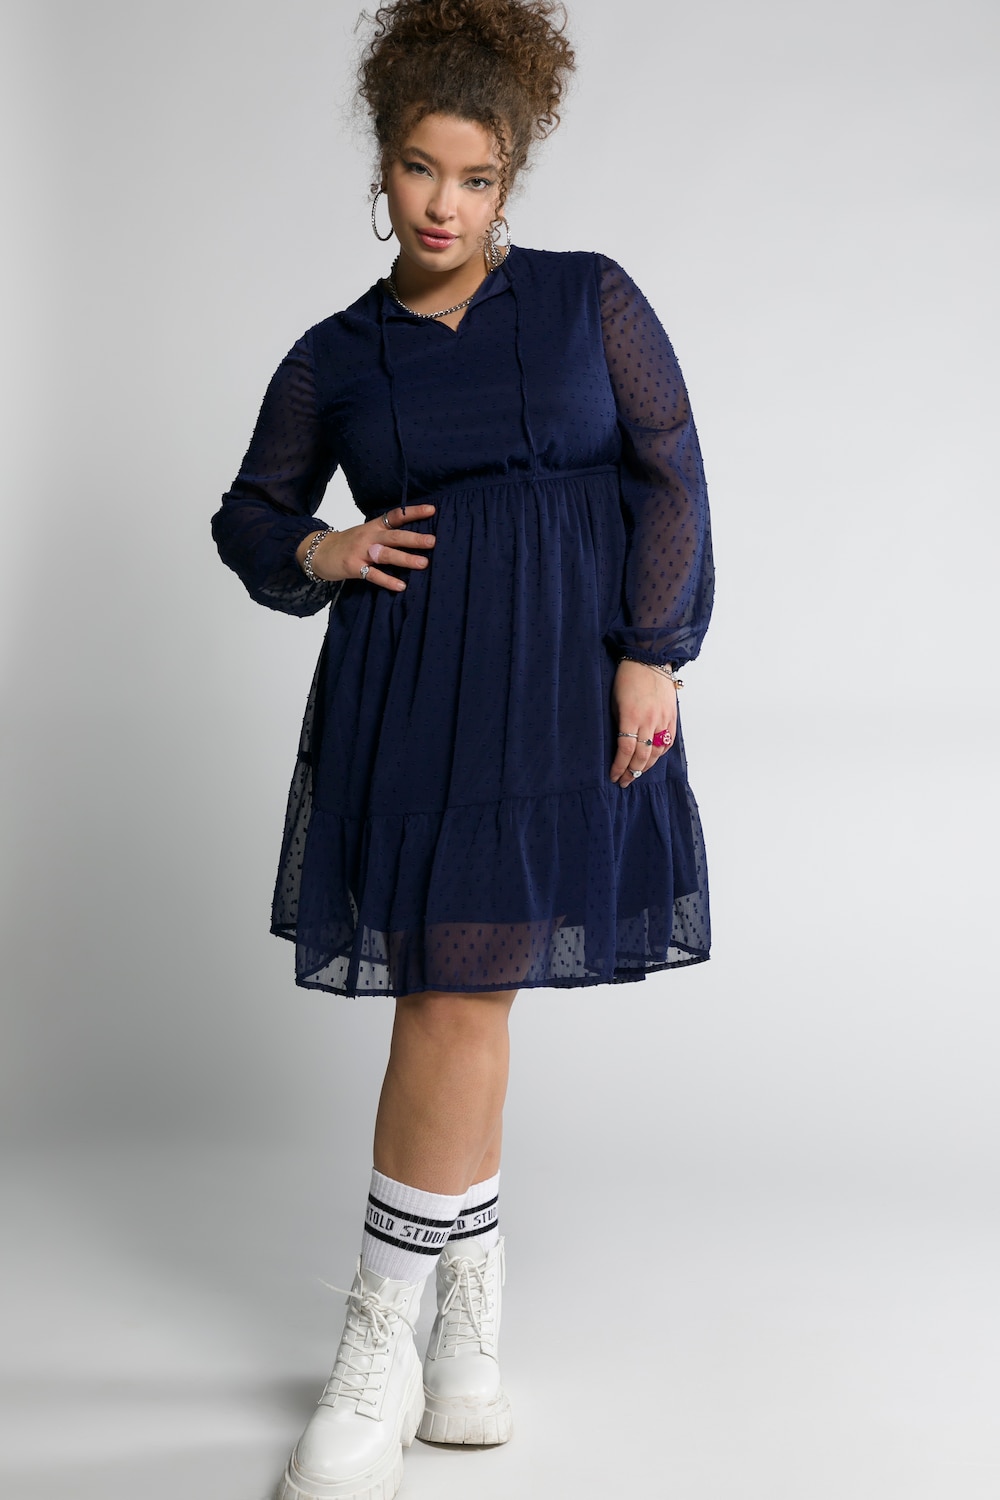 Grote Maten chiffon jurk, Dames, blauw, Maat: 50/52, Polyester, Studio Untold